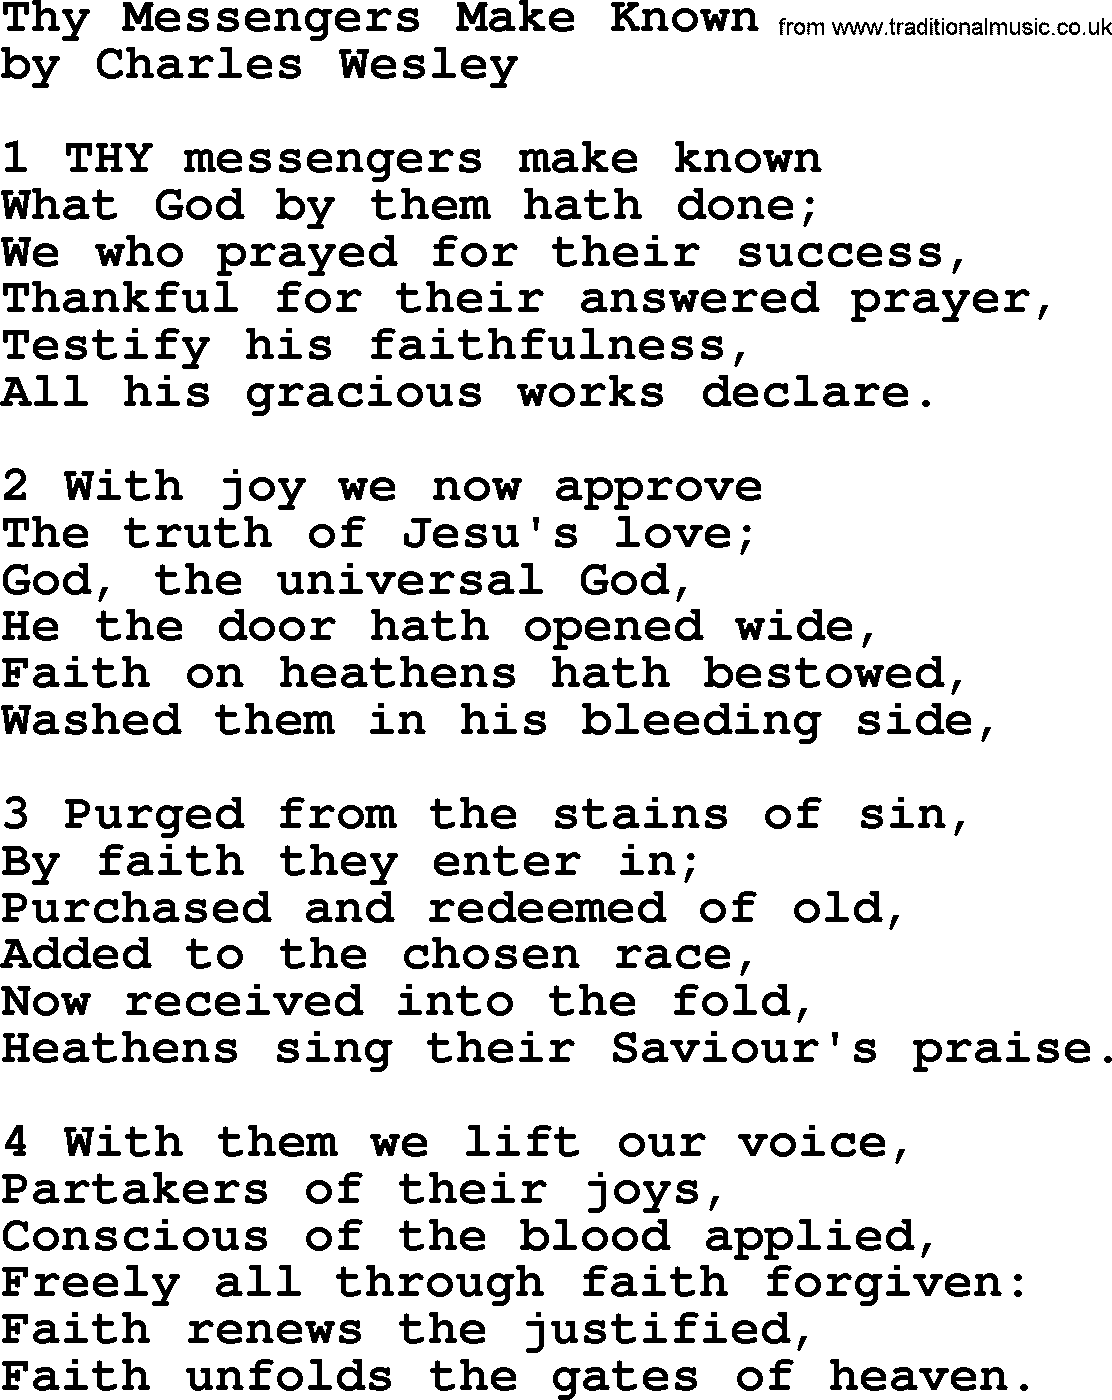 Charles Wesley hymn: Thy Messengers Make Known, lyrics